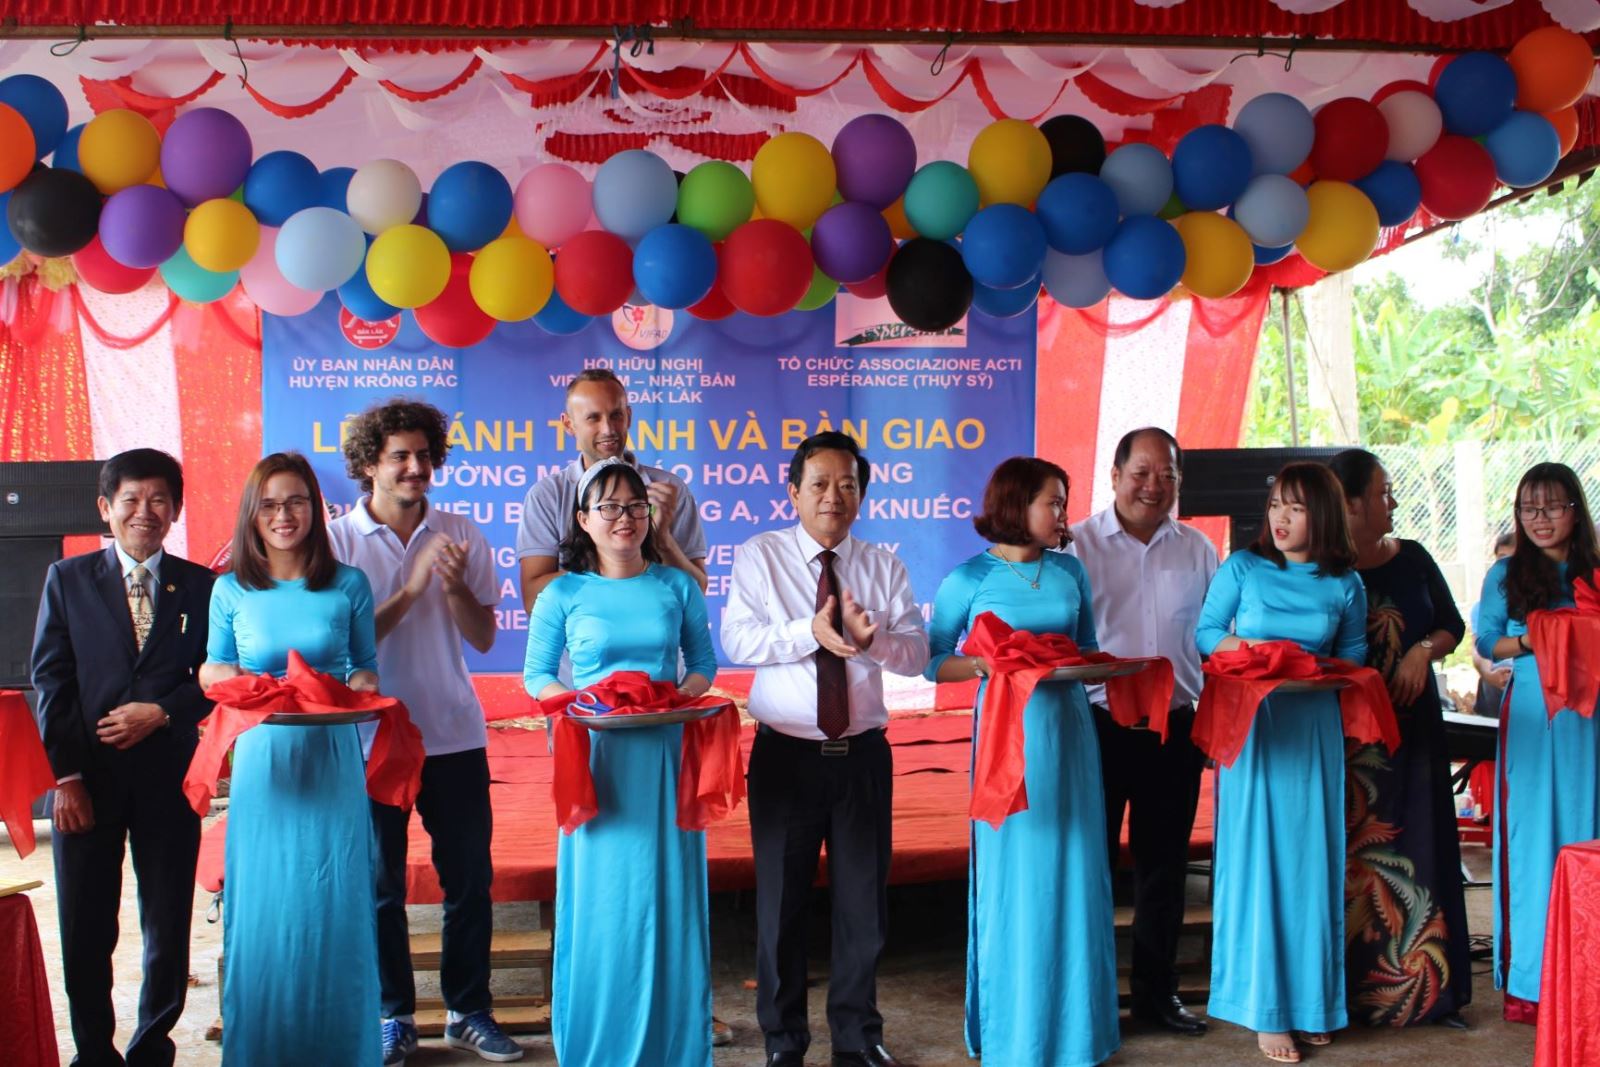 Associazione Acti Espérance builds new school for children in Dak Lak